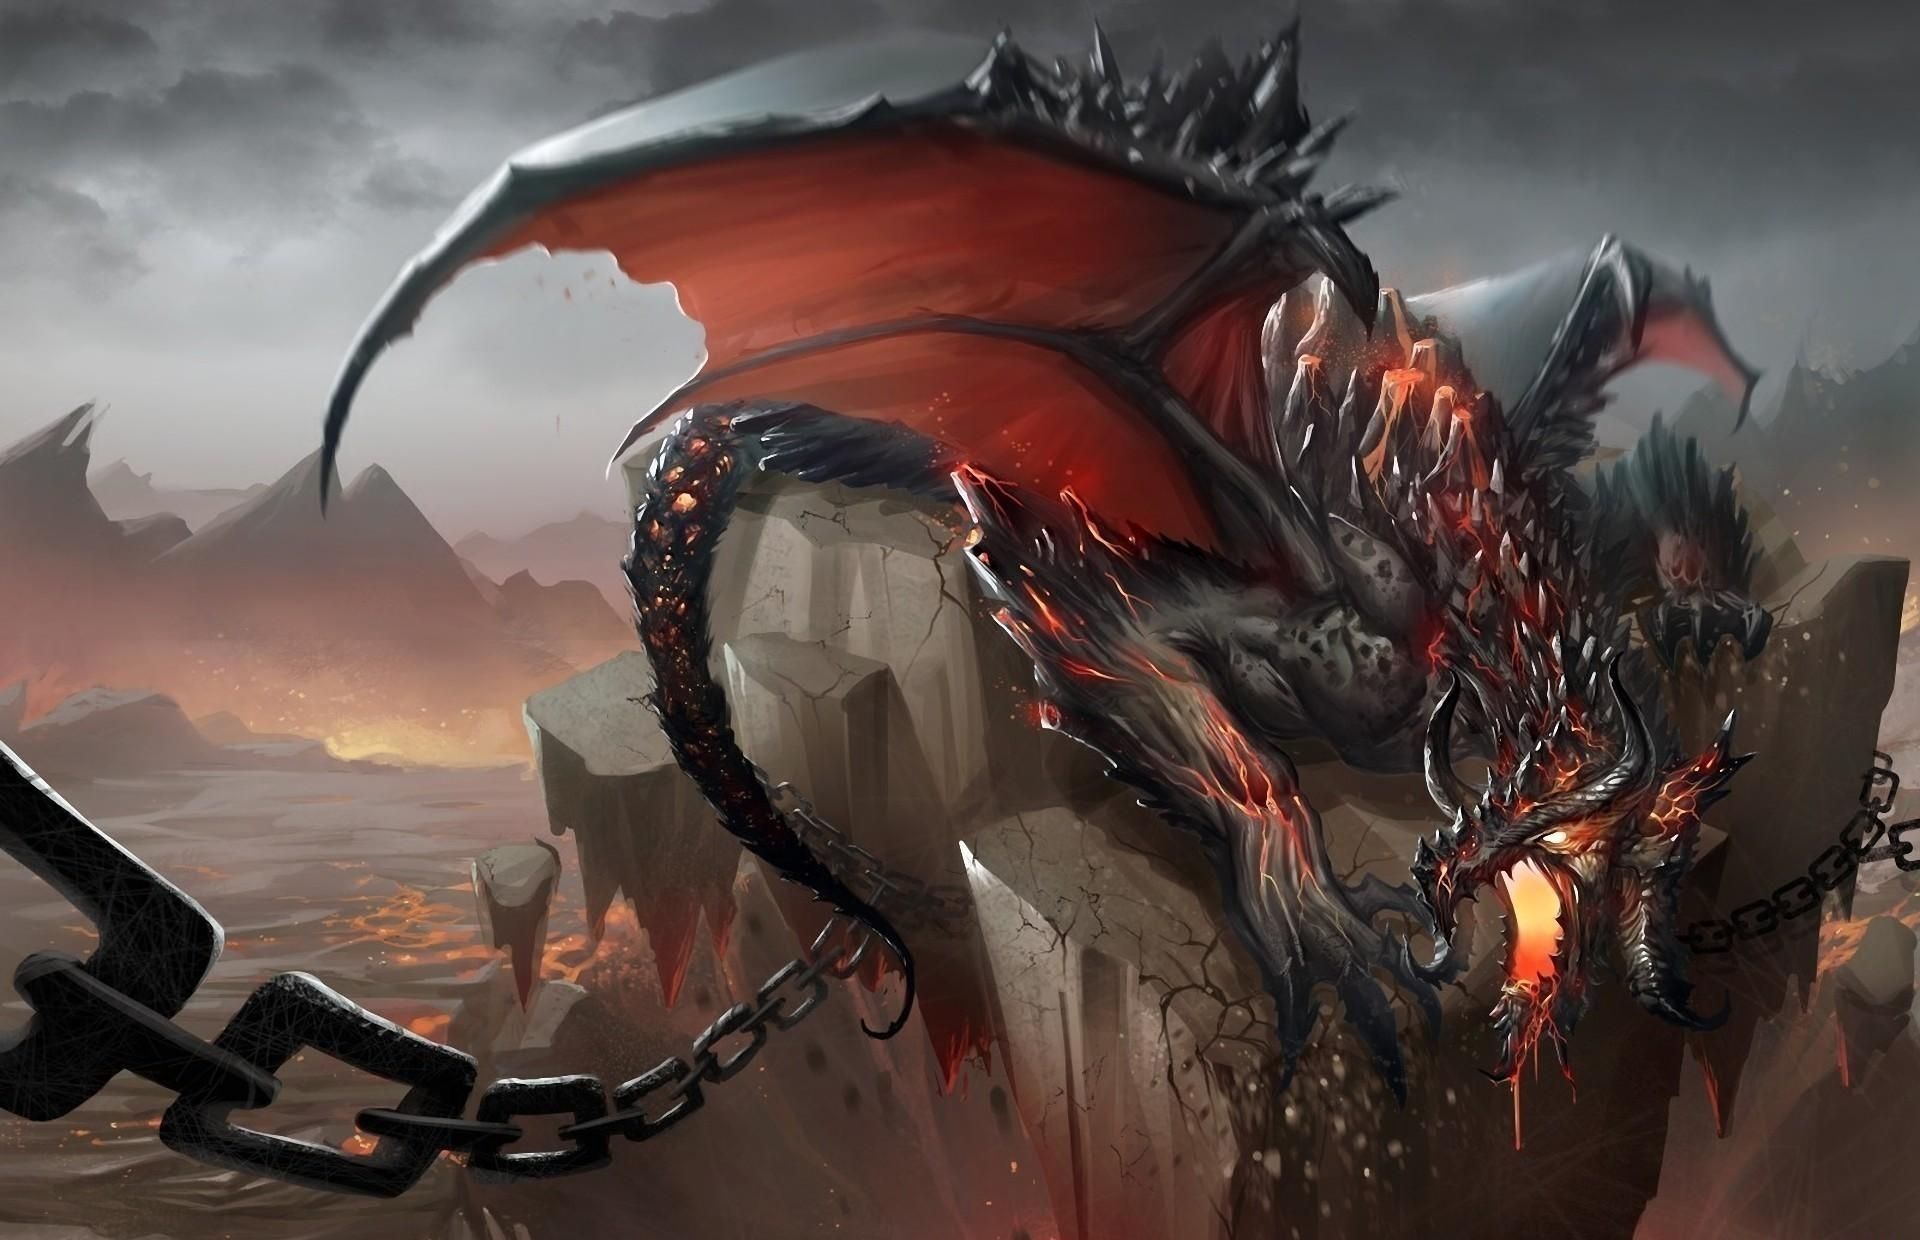 Dragon chained to rock. Dragon illustration, Dragon picture, Fantasy dragon